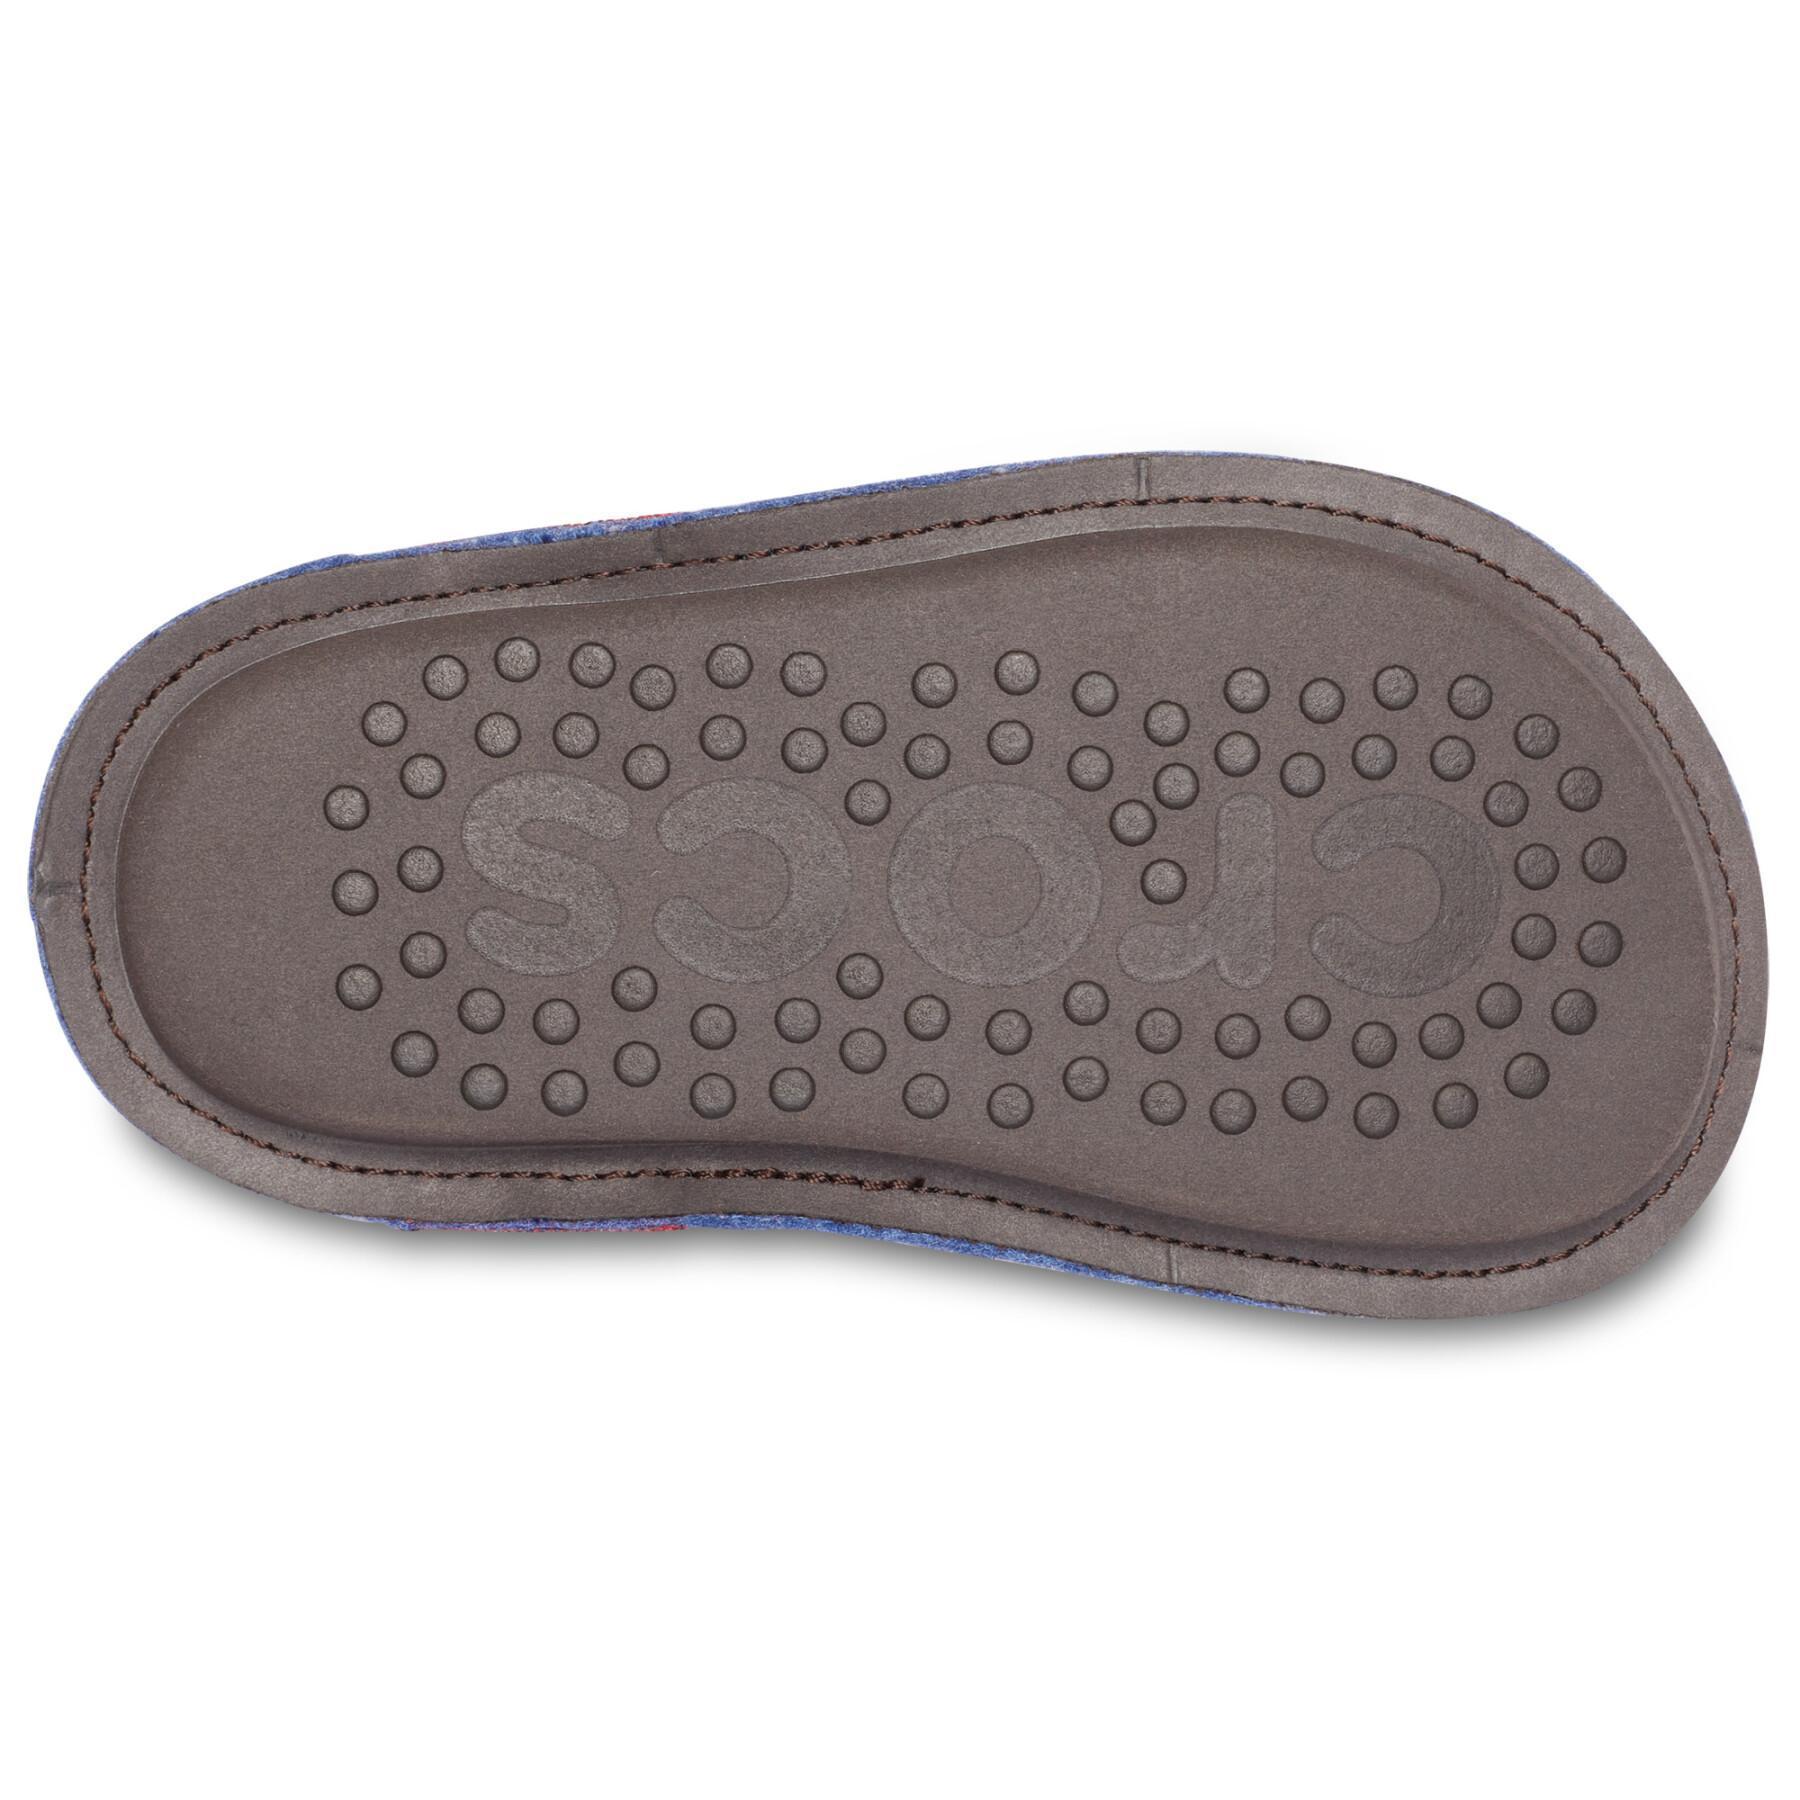 Kapcie dziecięce Crocs classic slipper